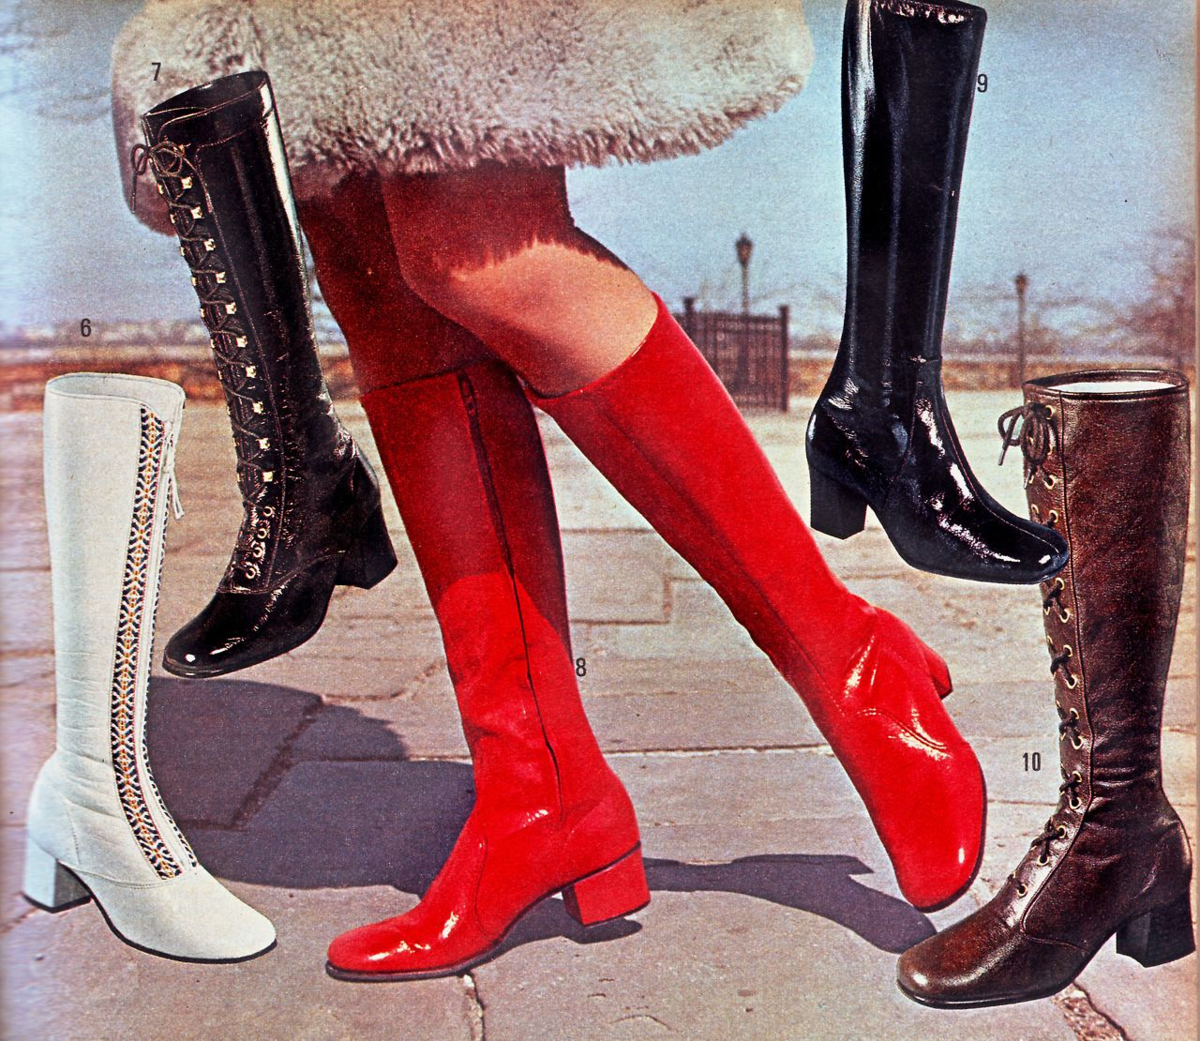 Go-go Boots Fashion 1960 сапоги чулки. Сапоги чулки в 70е. Сапоги чулки СССР В 70е годы. Сапоги чулки 80-х годов.